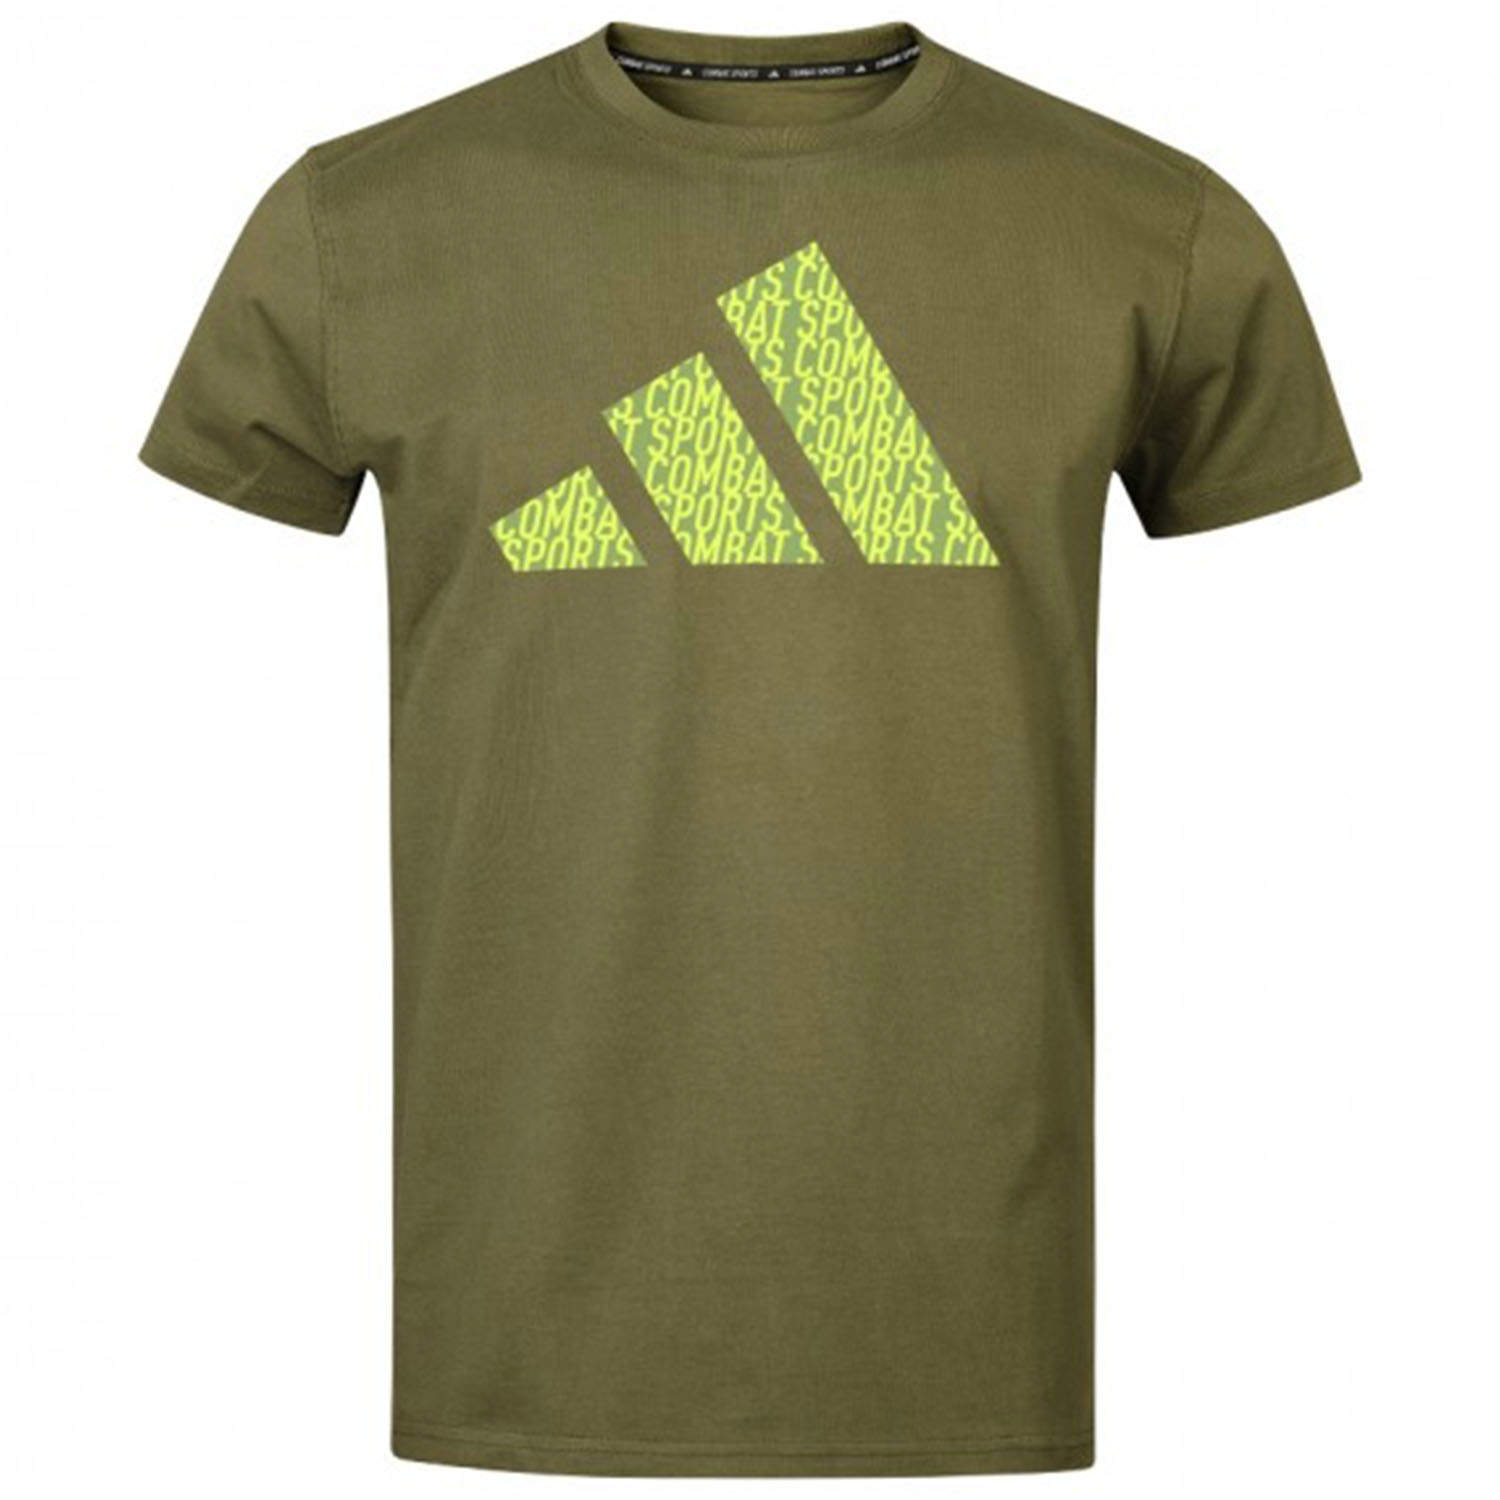 adidas T-Shirt, Perfo Script Graphic Combat Sports, olive, M